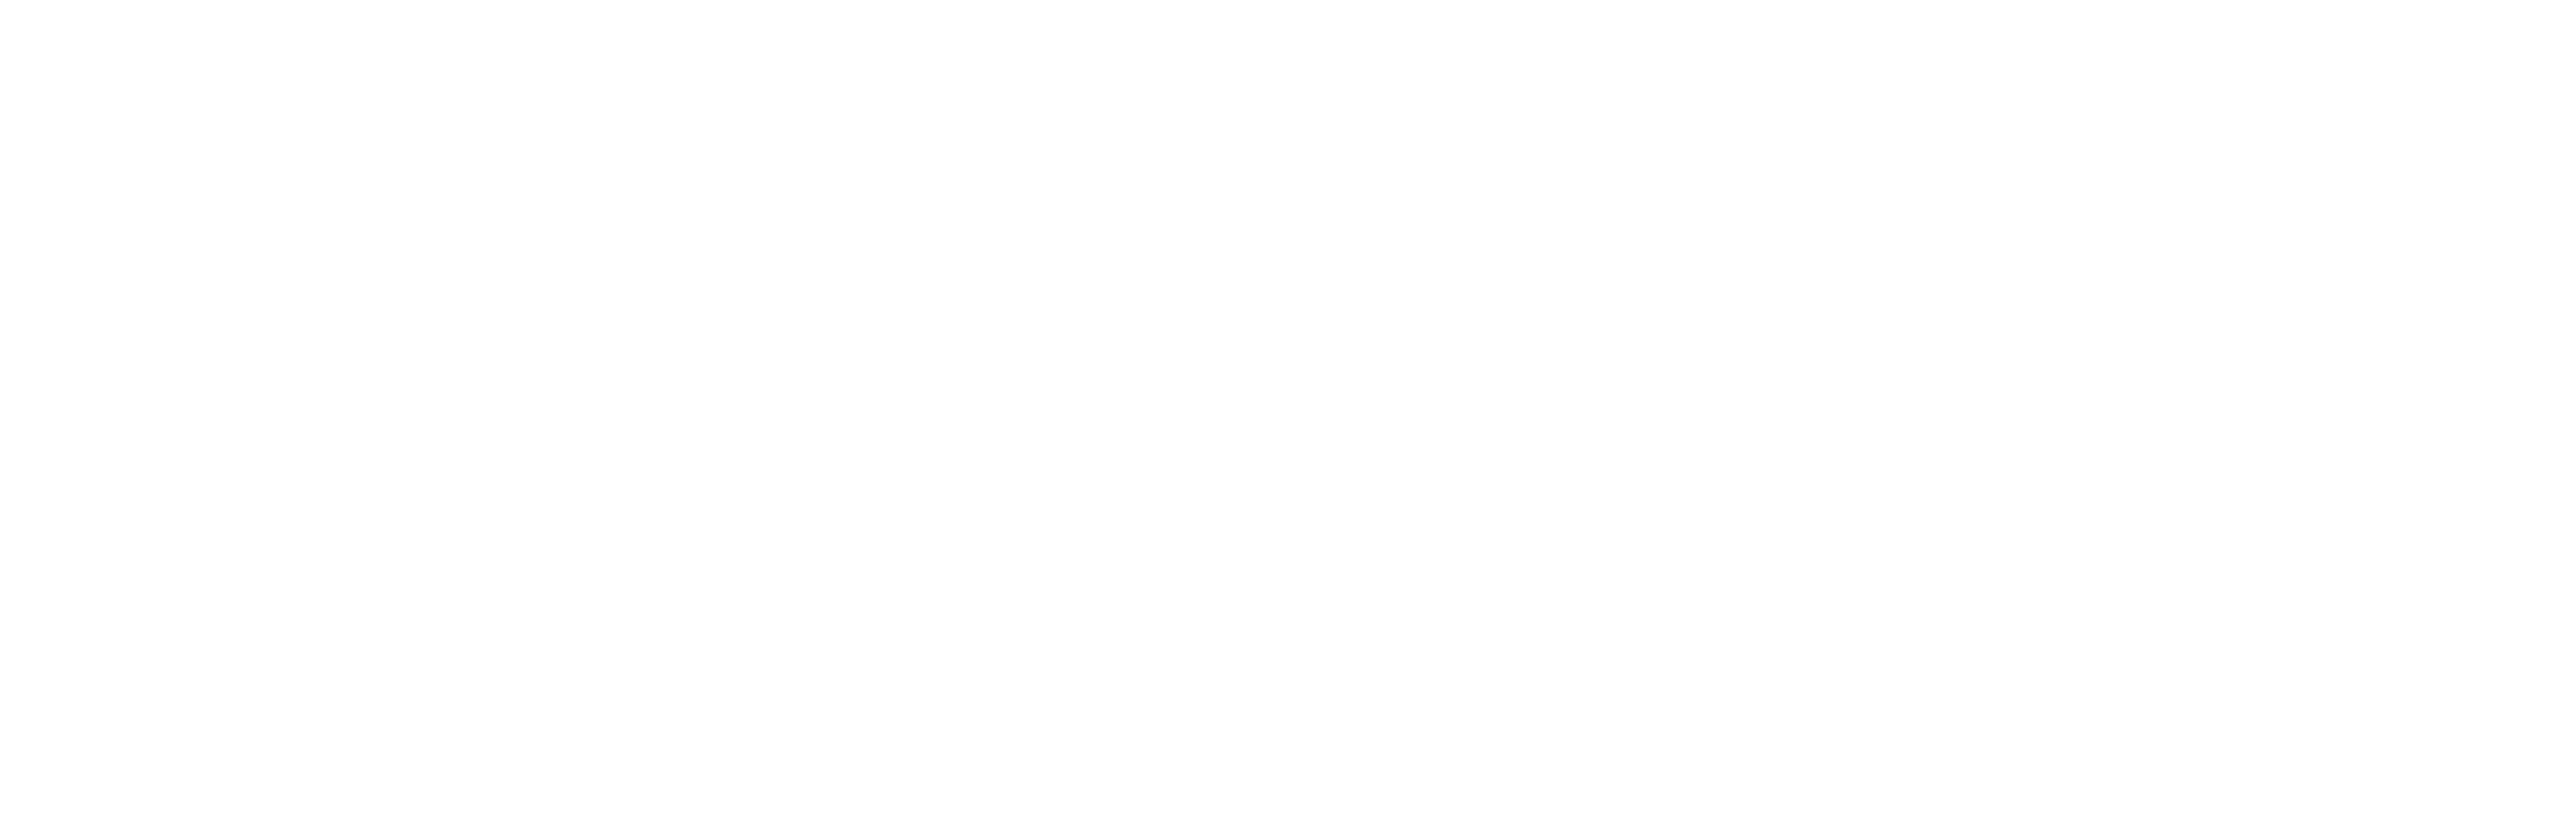 Logo institucional de Loris Malaguzzi